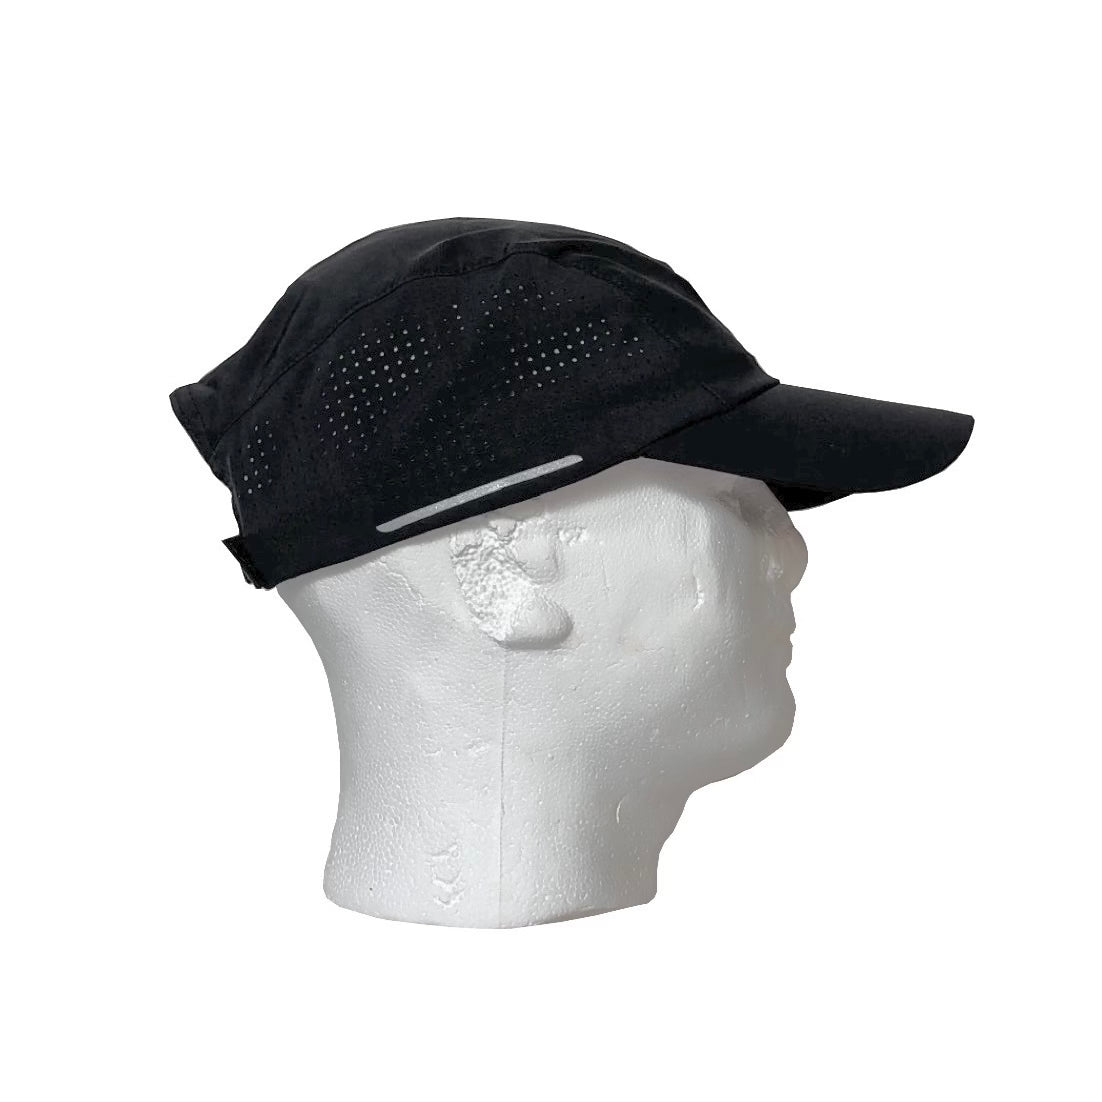 amateur run gang run hat (black)